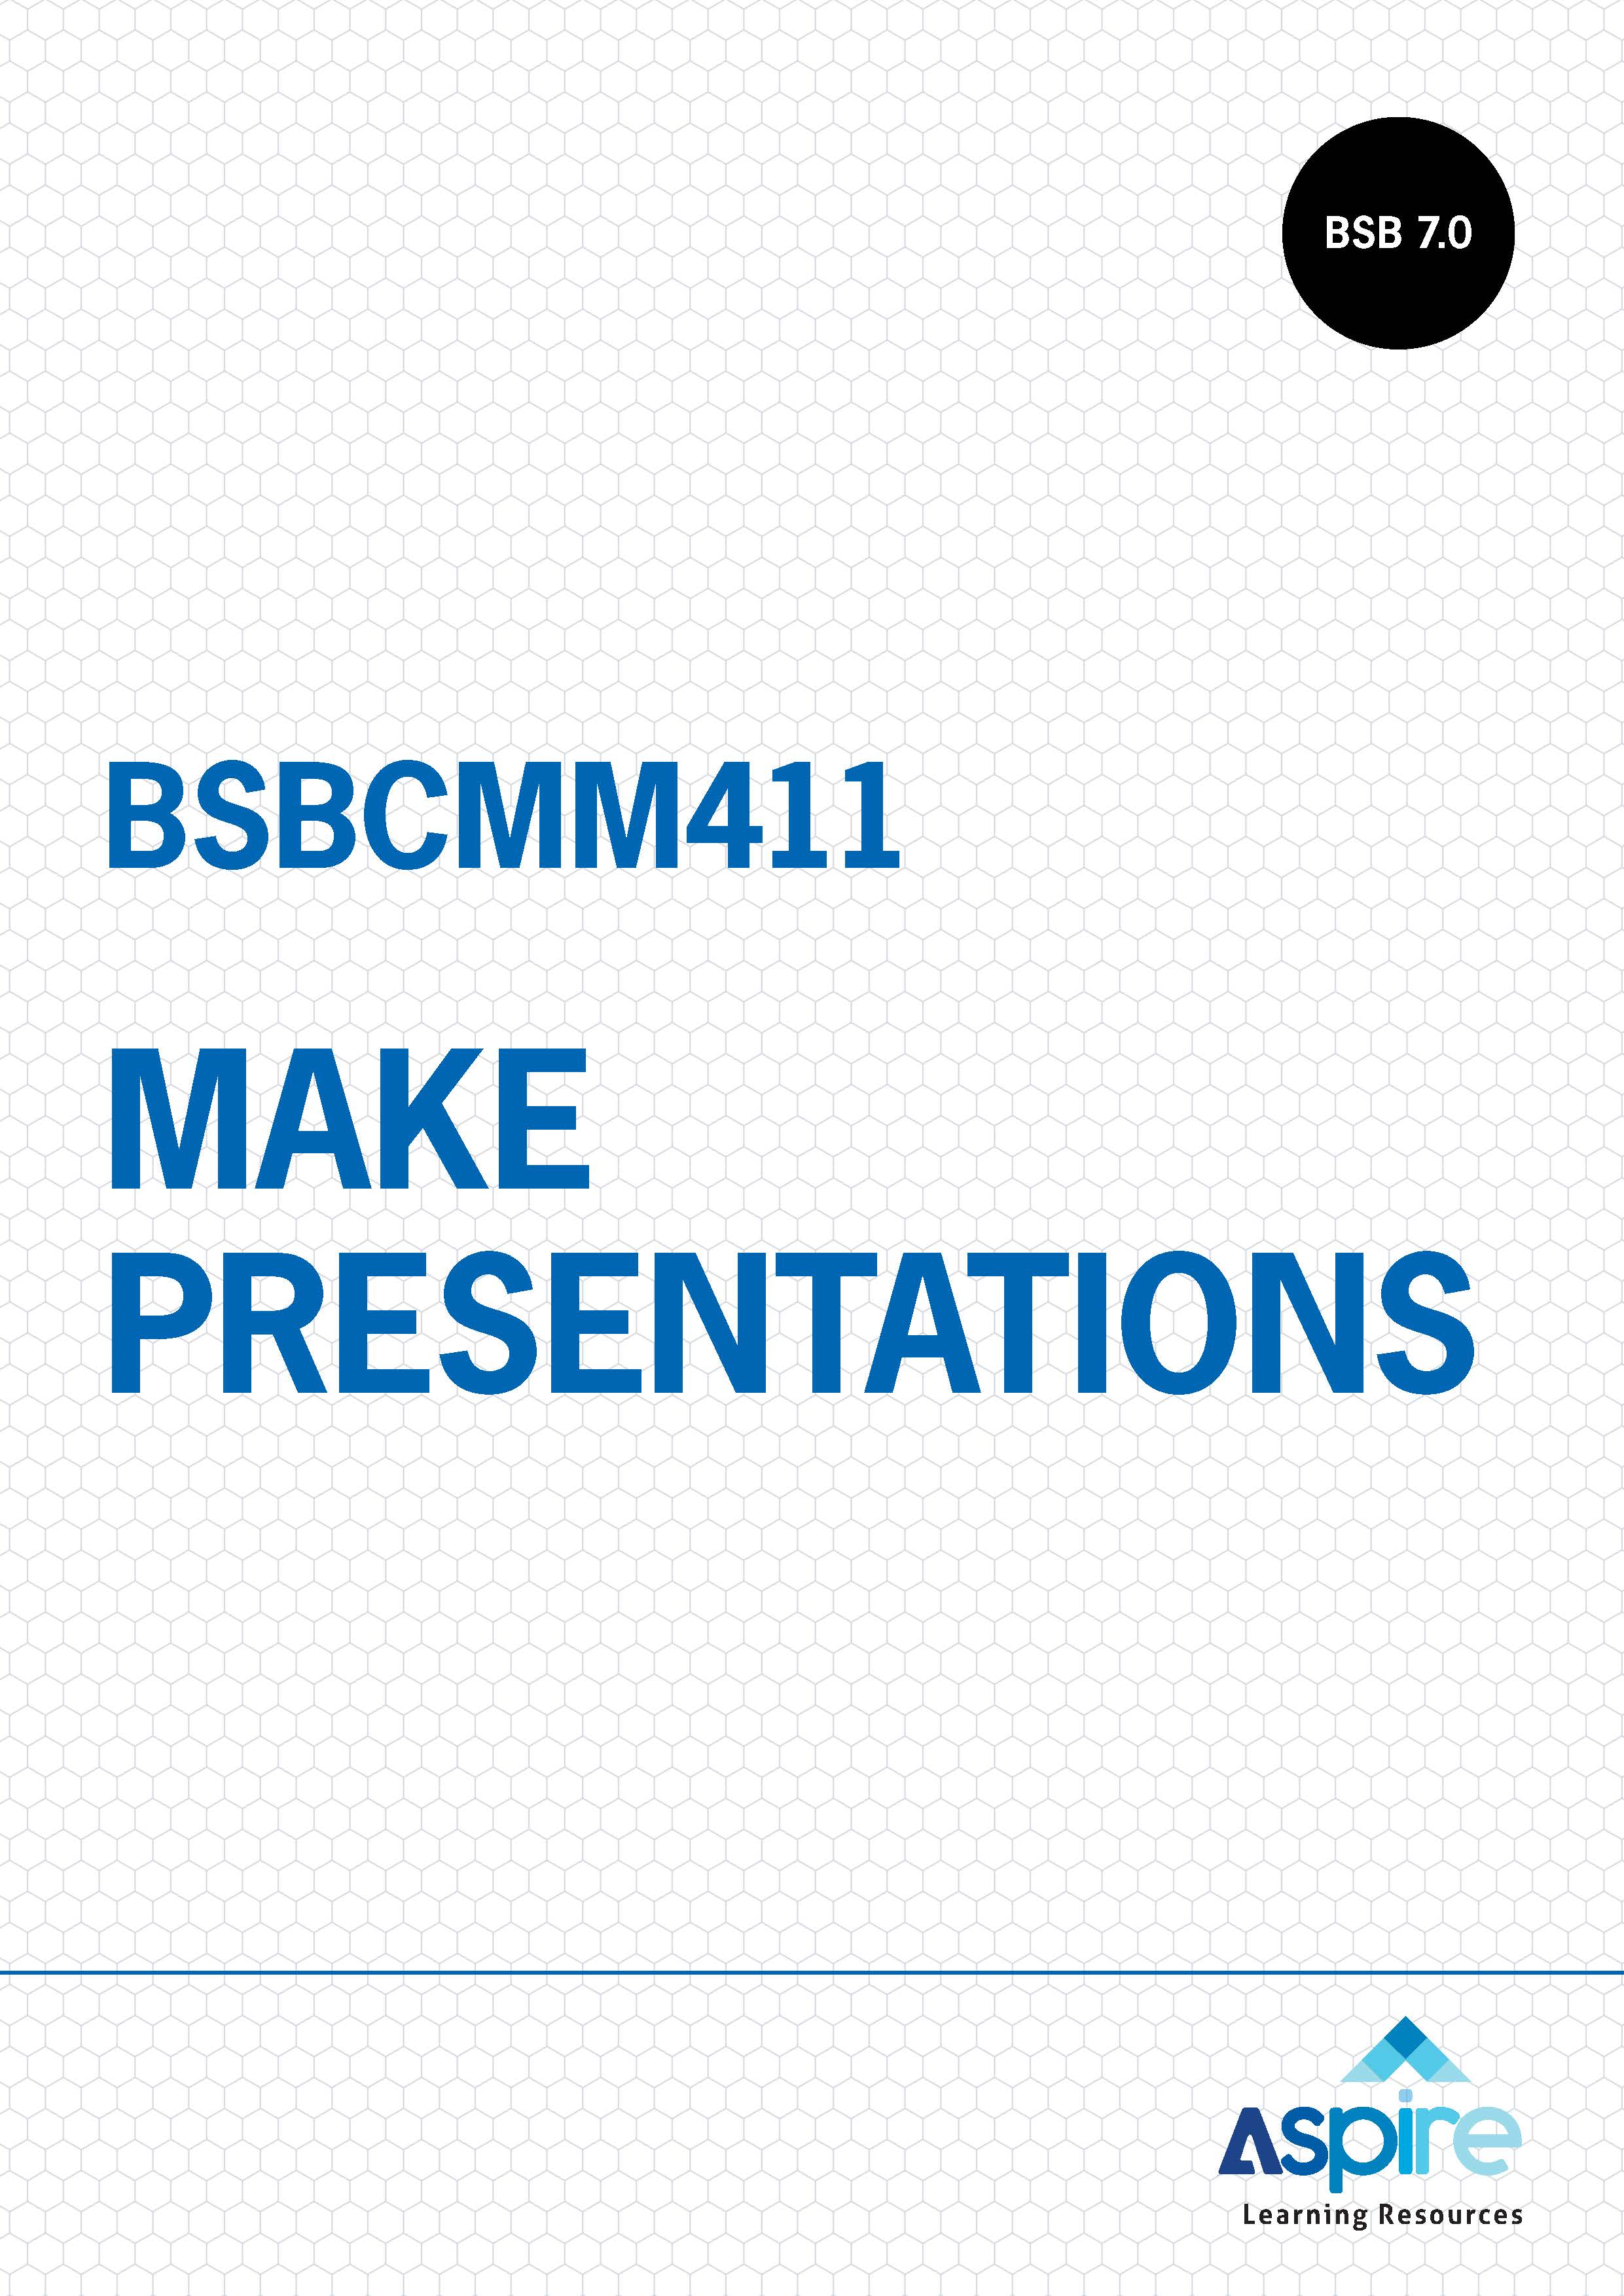 make a presentation unit of competency